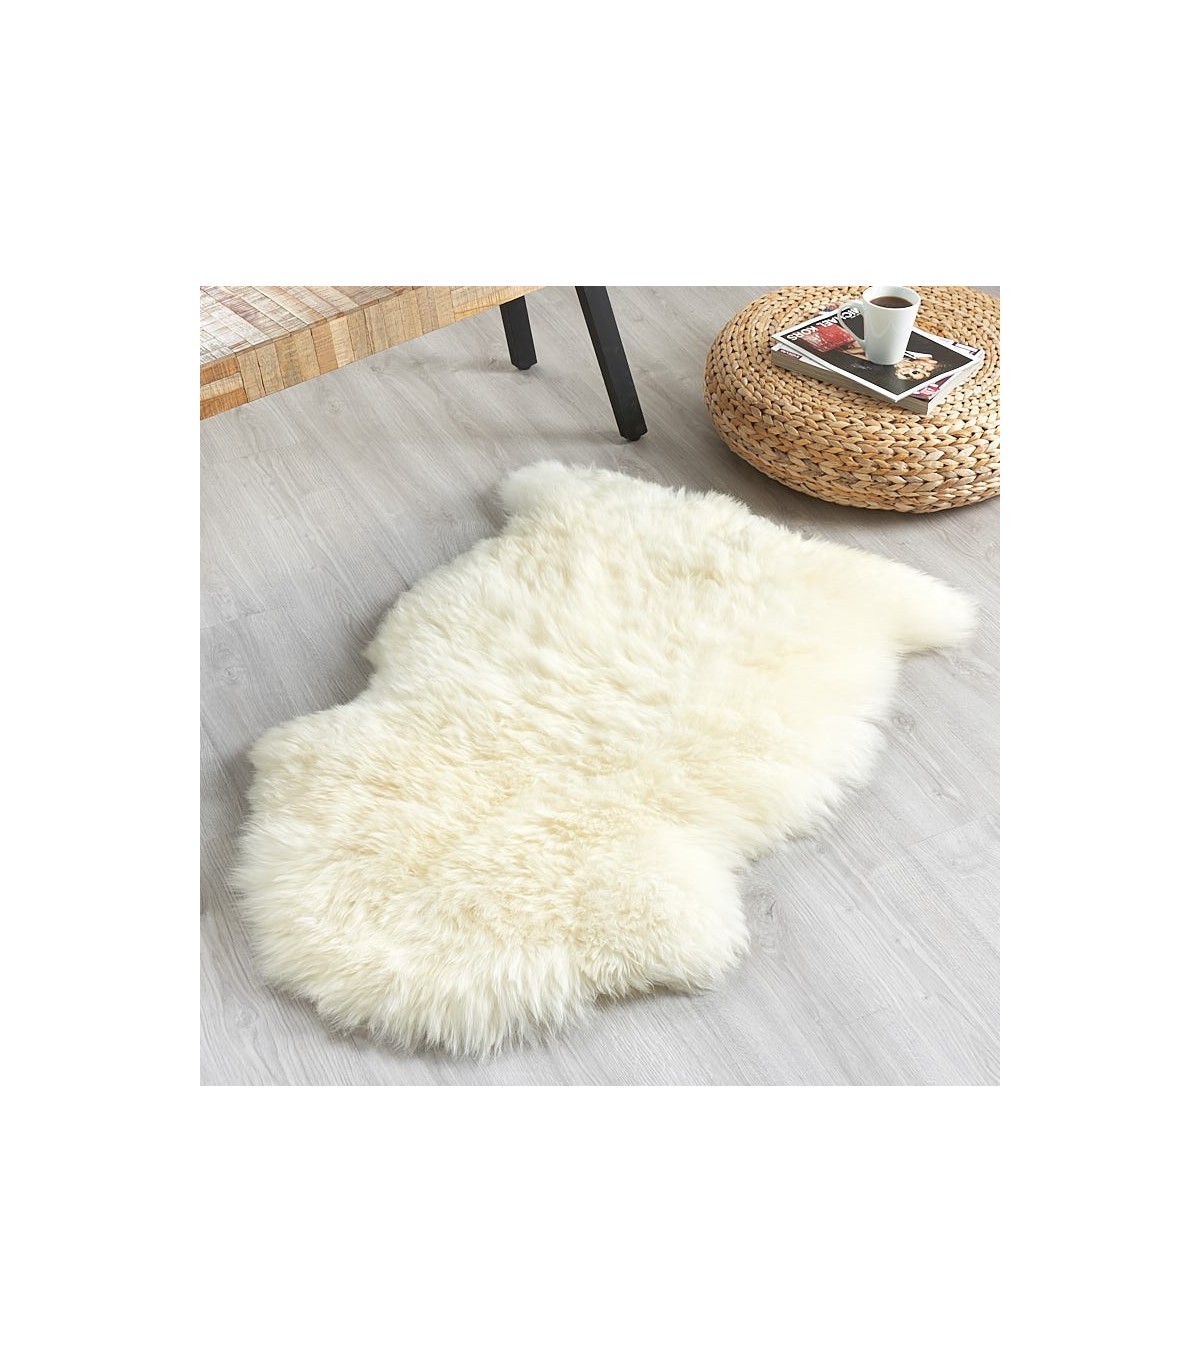 New Icelandic White Sheepskin Rug Throw Size 2x4 Feet 